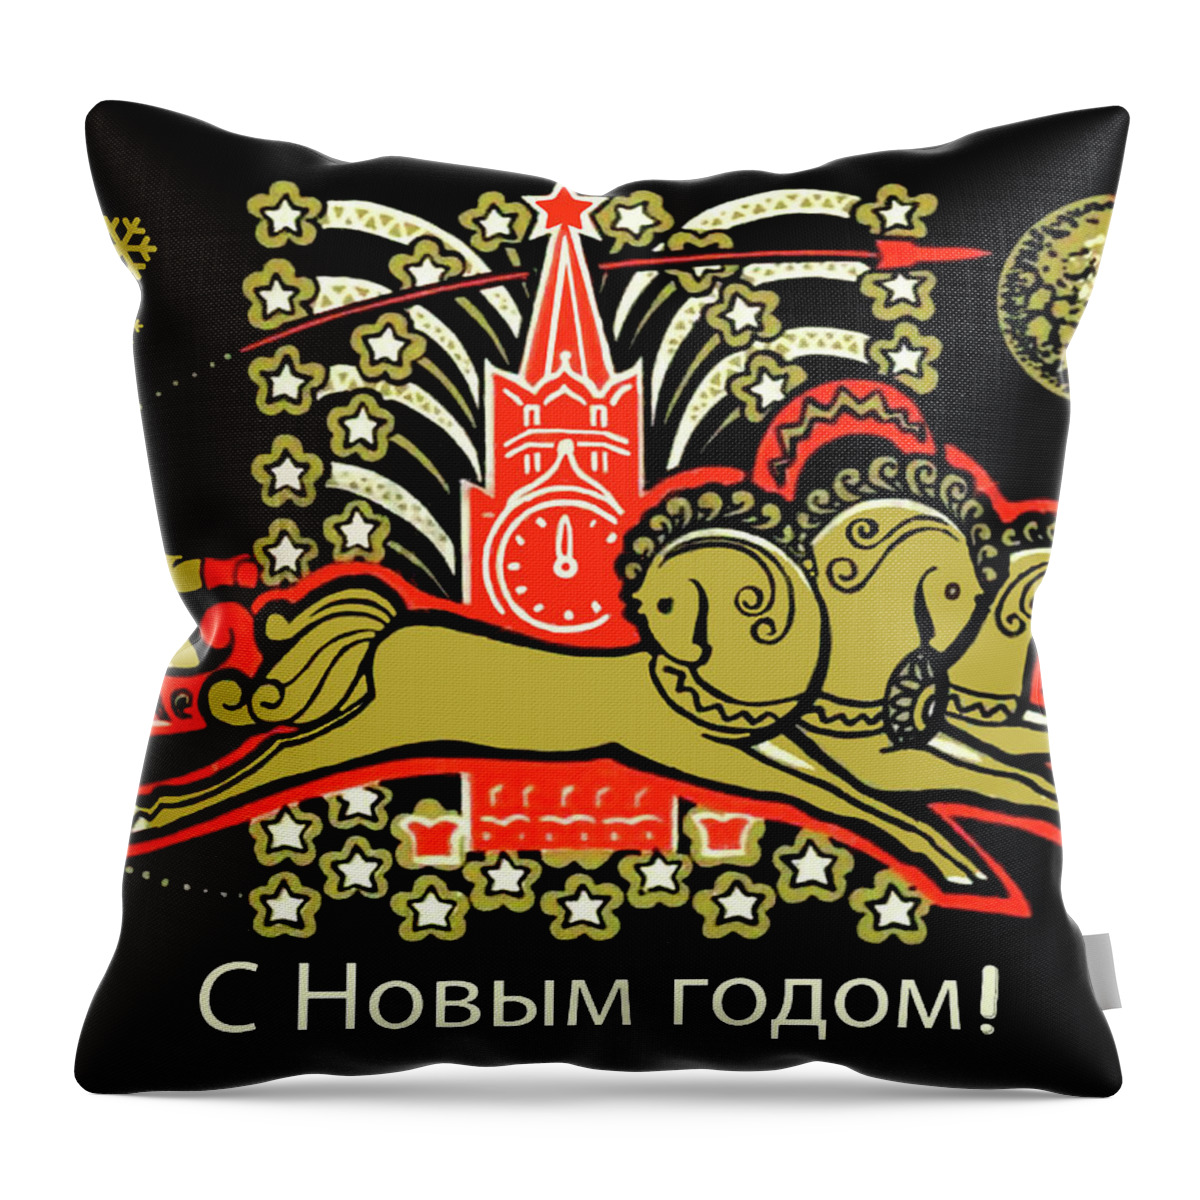 Soviet Throw Pillow featuring the digital art Soviet Flying Santa by Long Shot